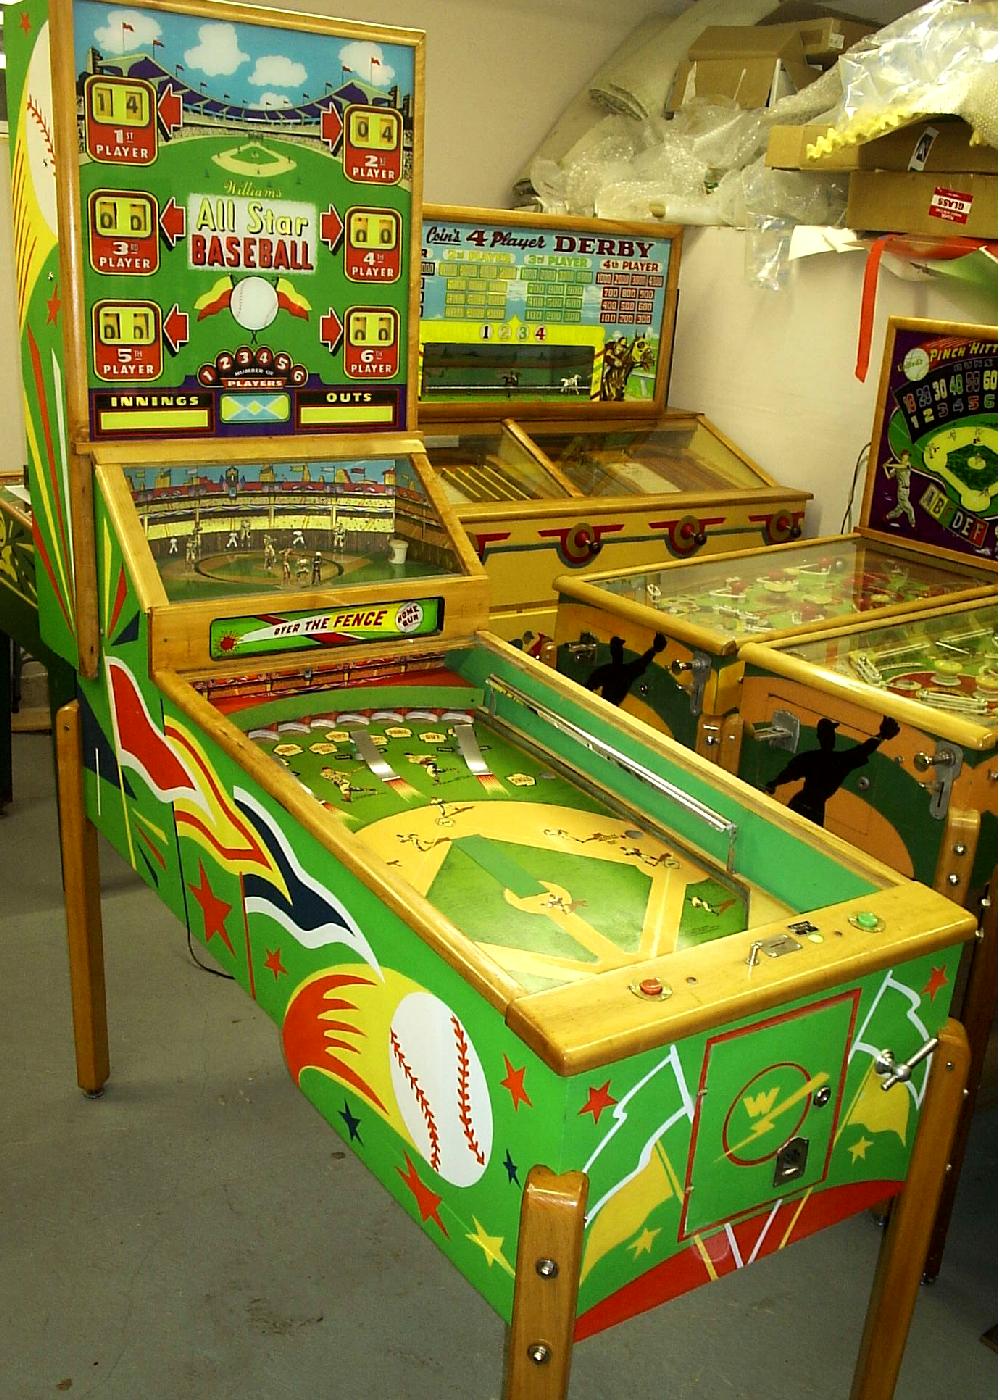 1954 Williams All Star Baseball arcade pinball game